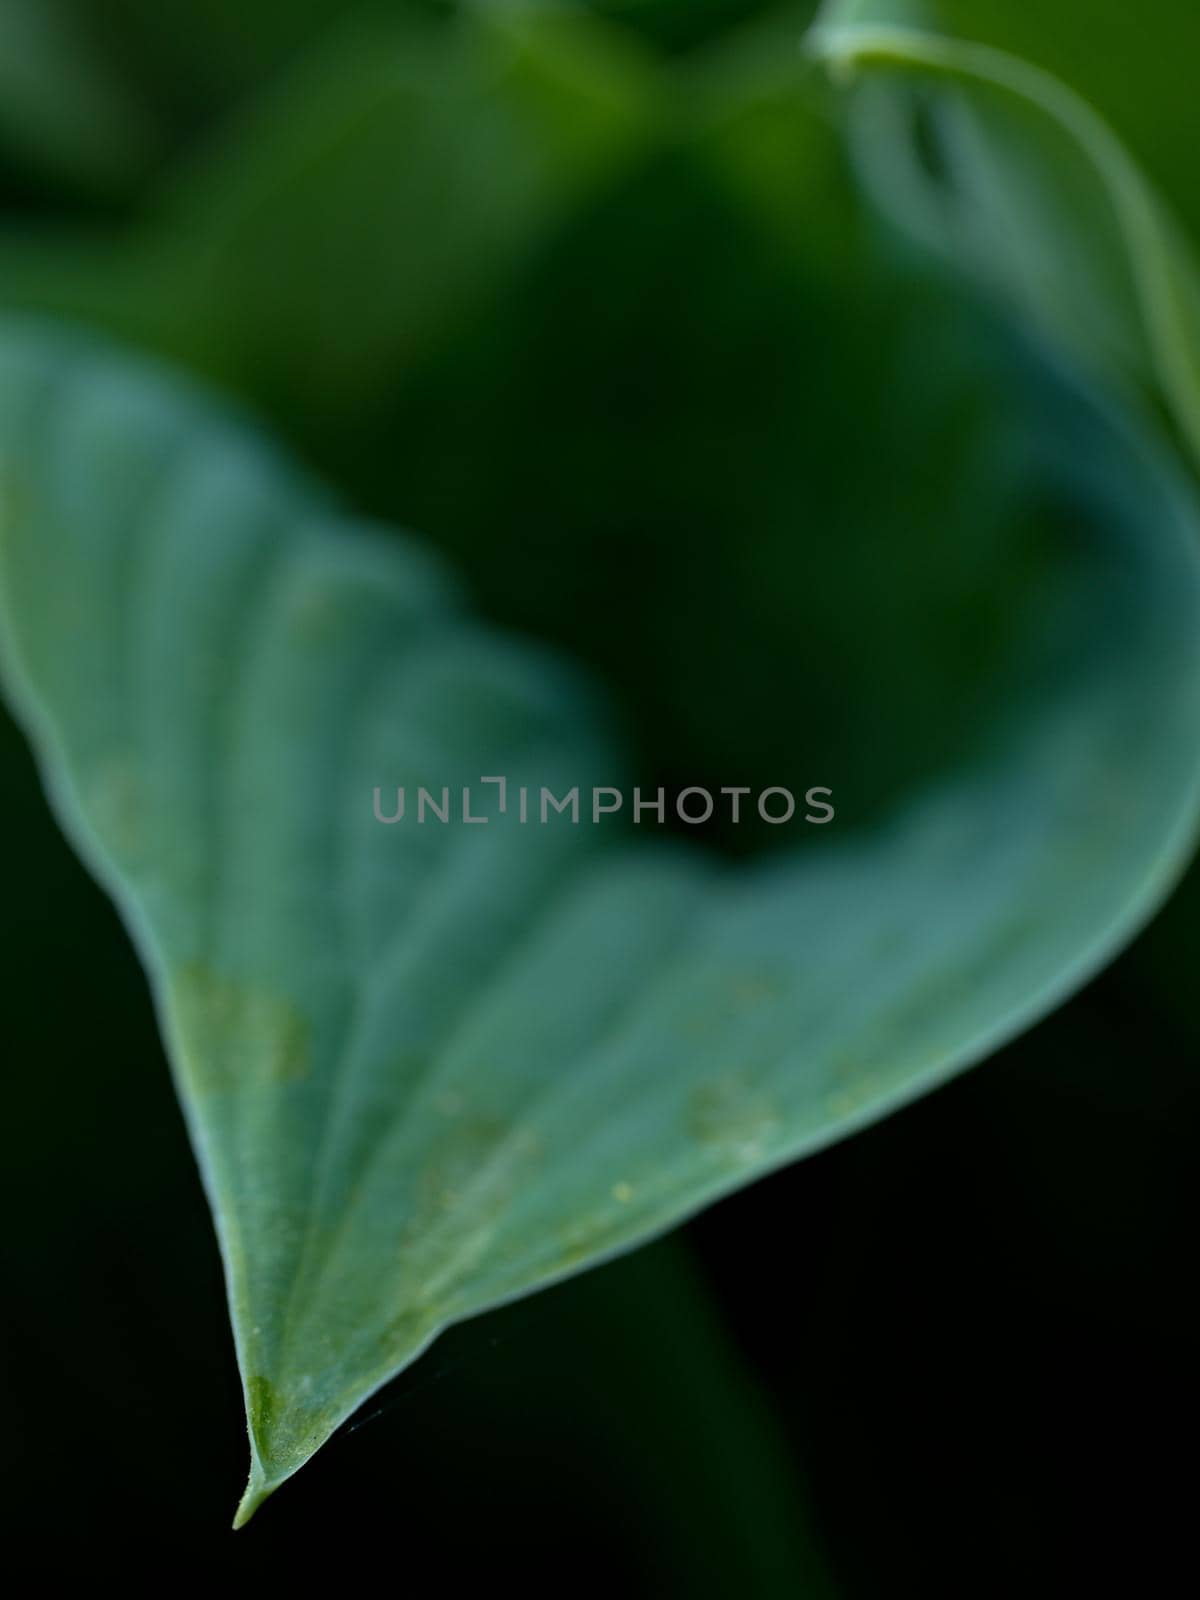 Leaf contour of the hostа plan, lush foliage. Dark green colored leaves  by rdonar2